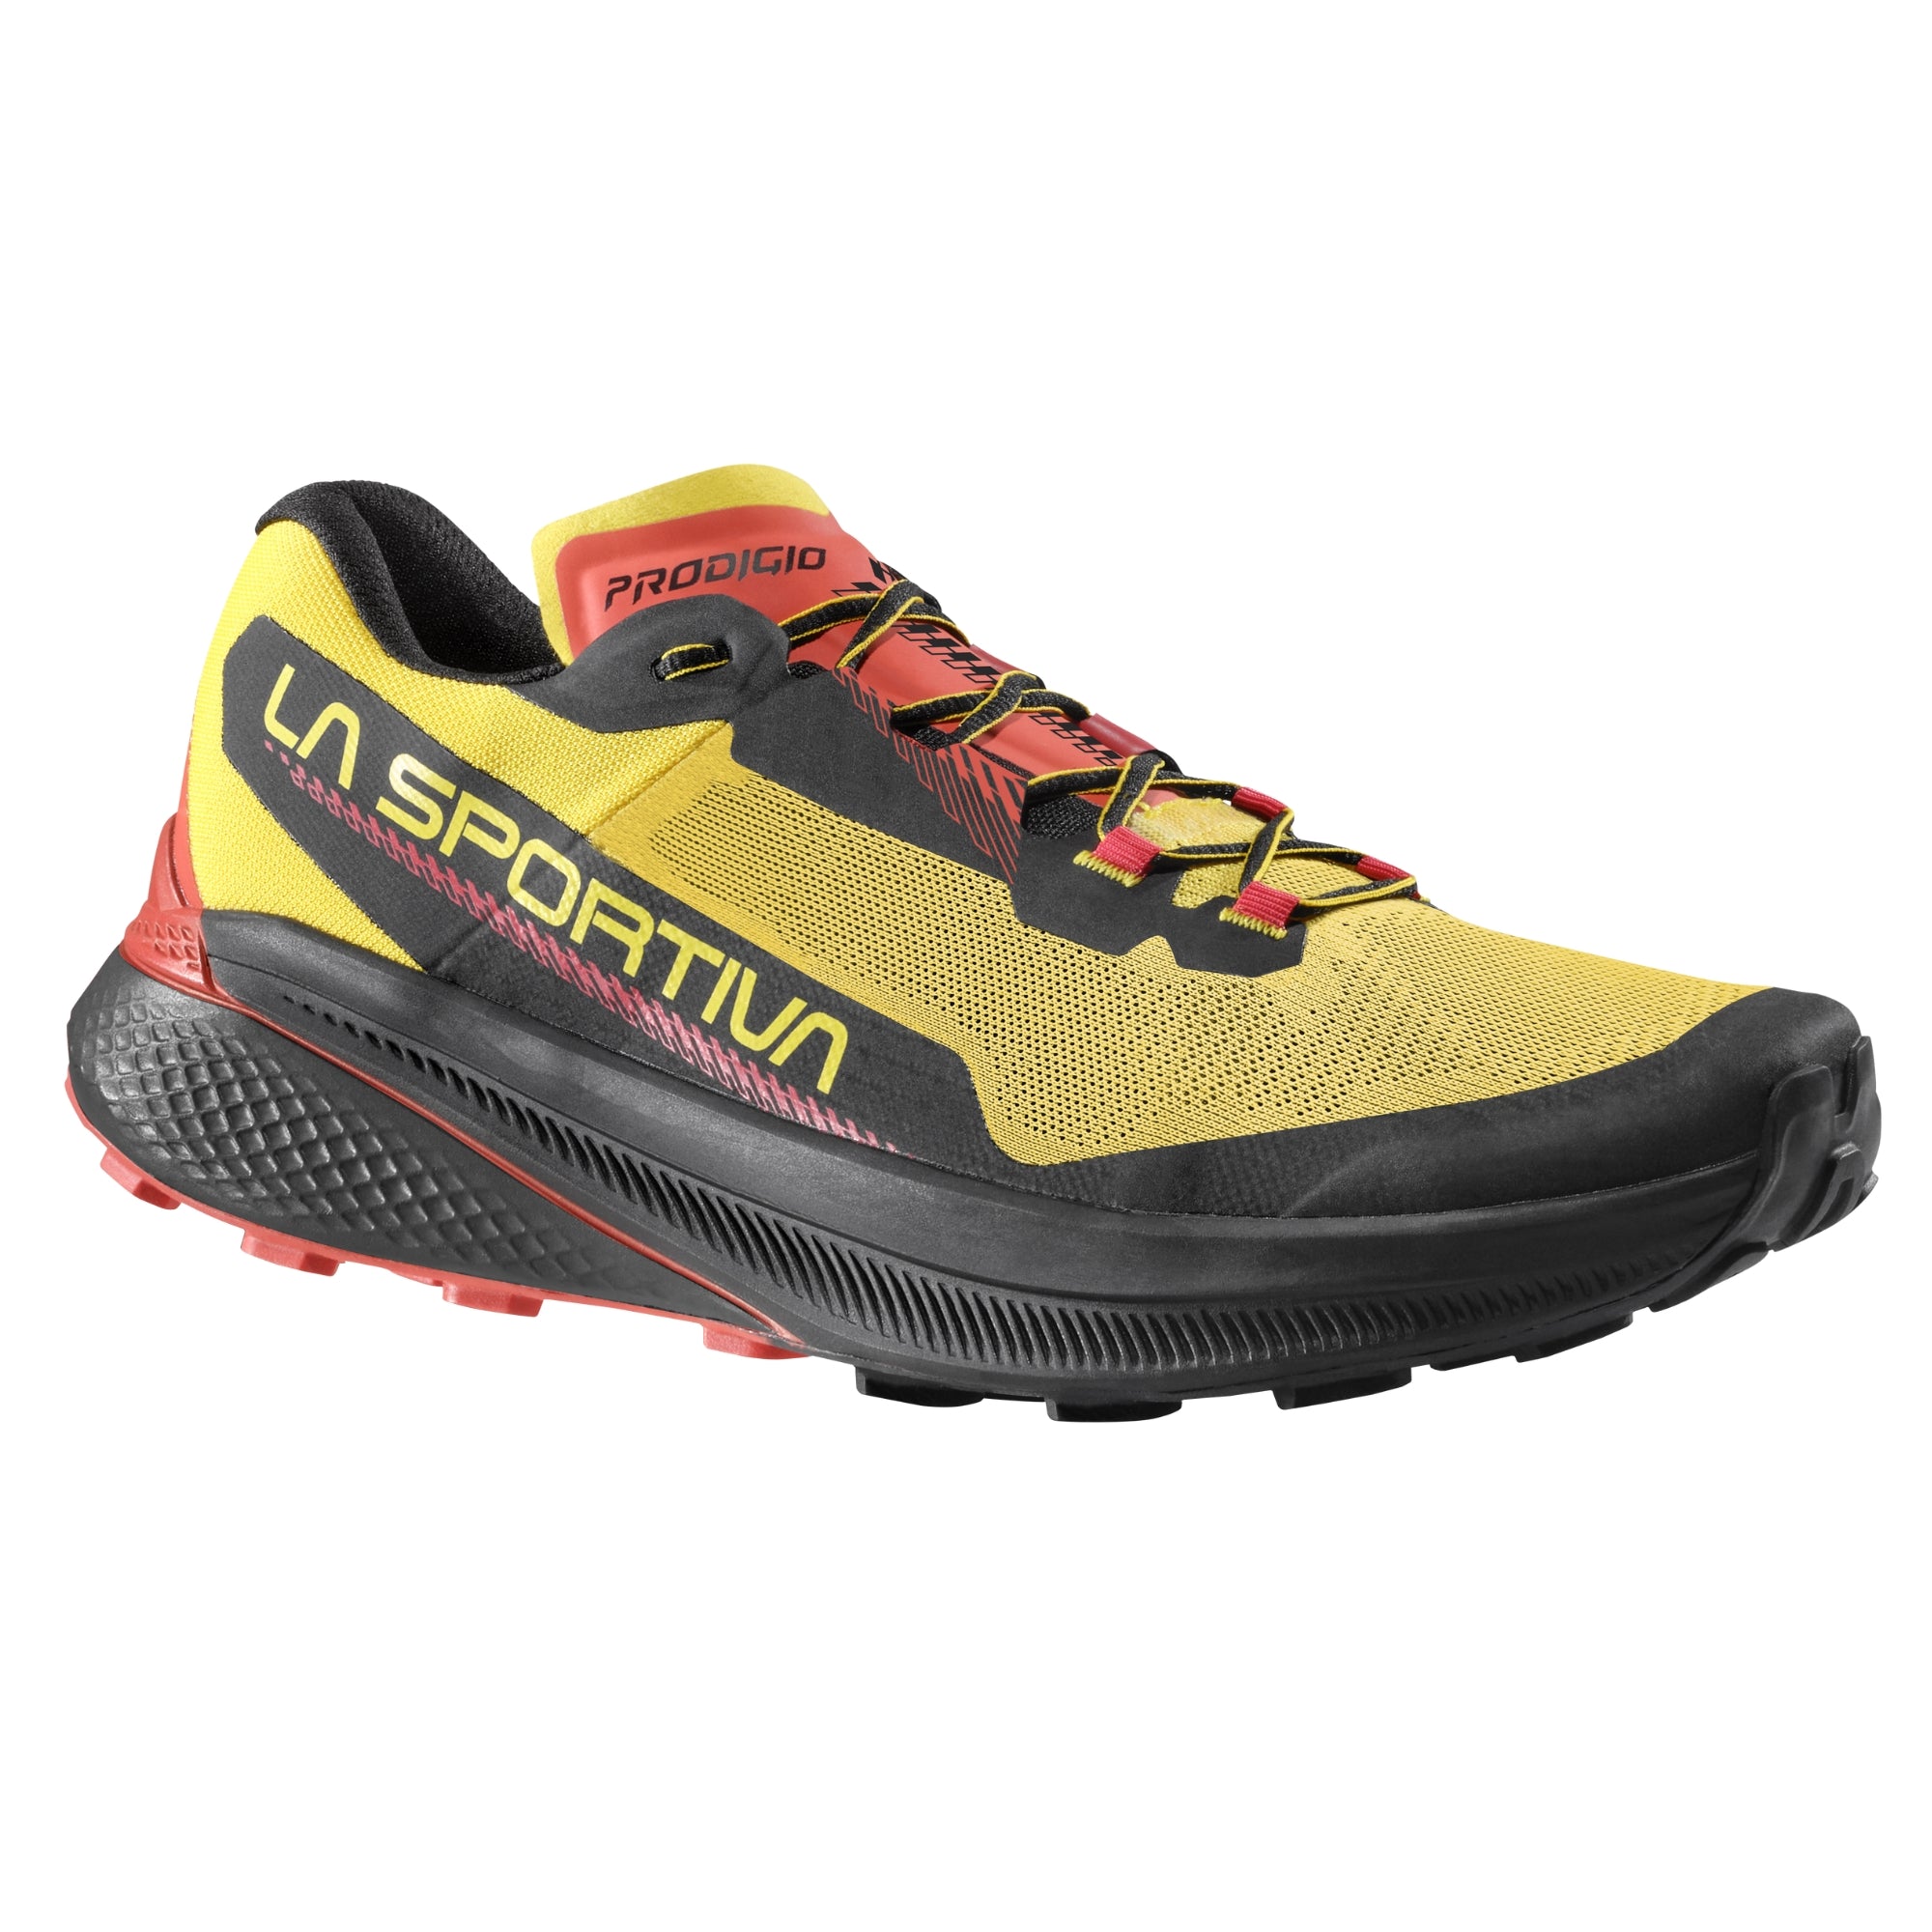 La Sportiva Prodigio Black/Yellow mens running shoes